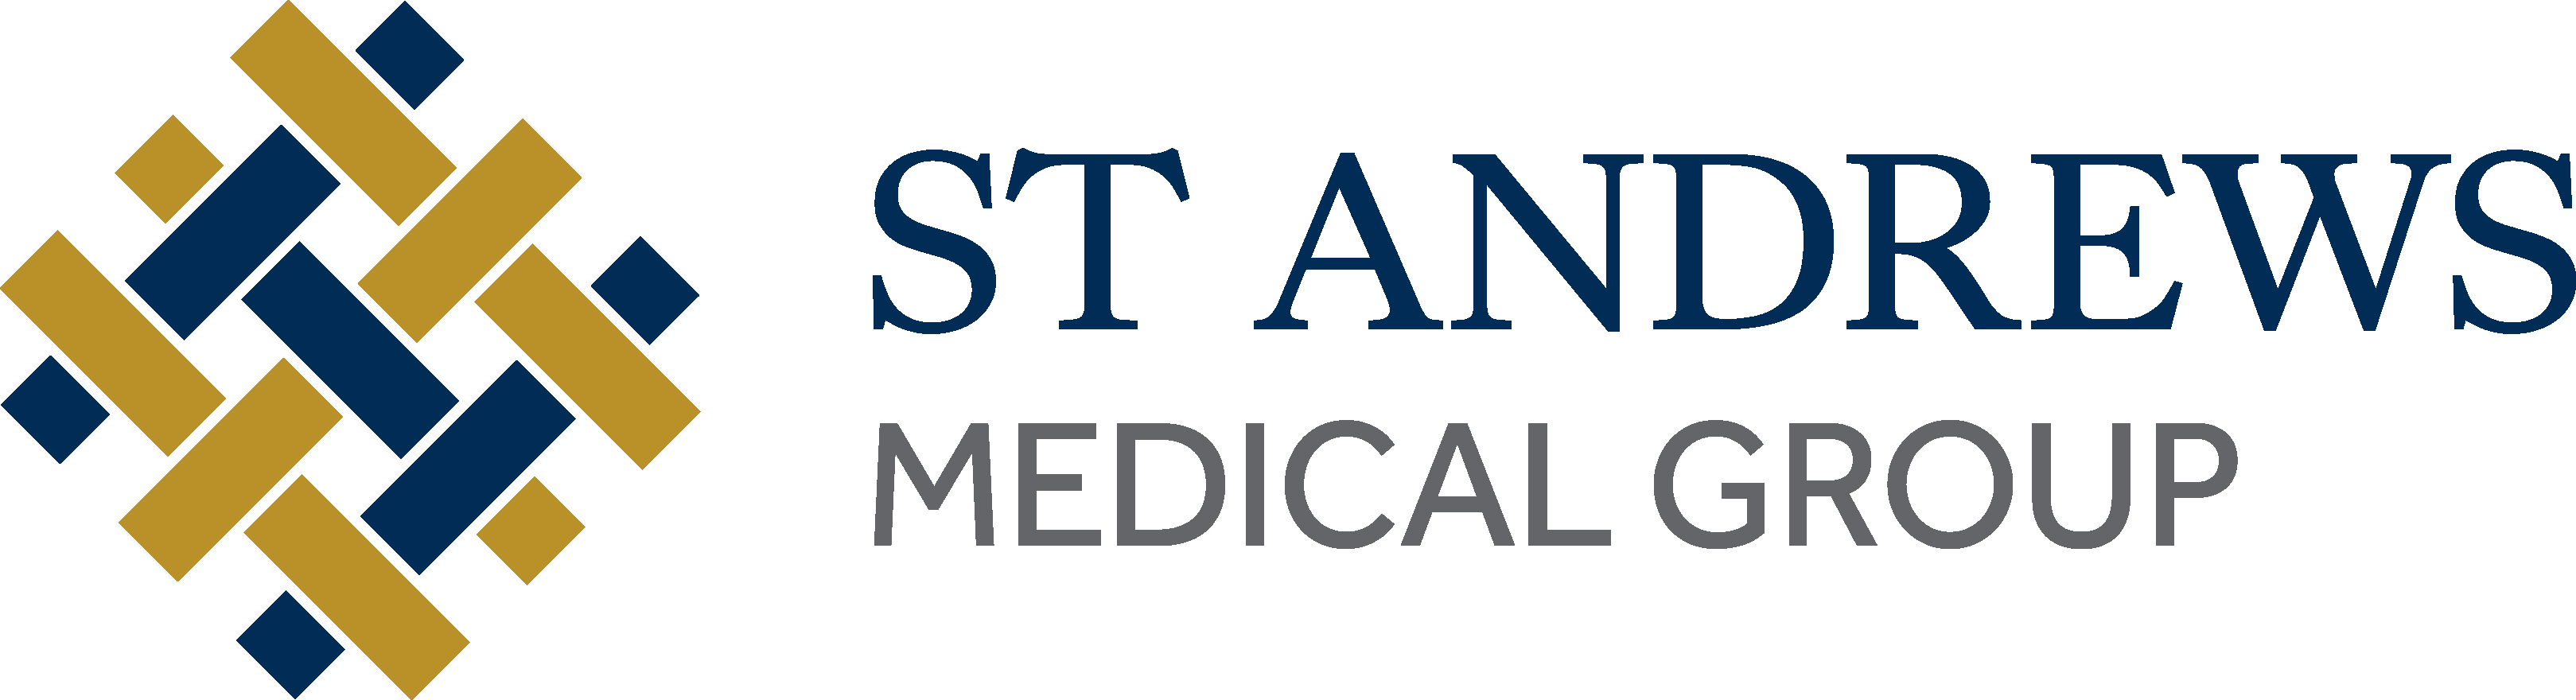 St Andrews Medical Group